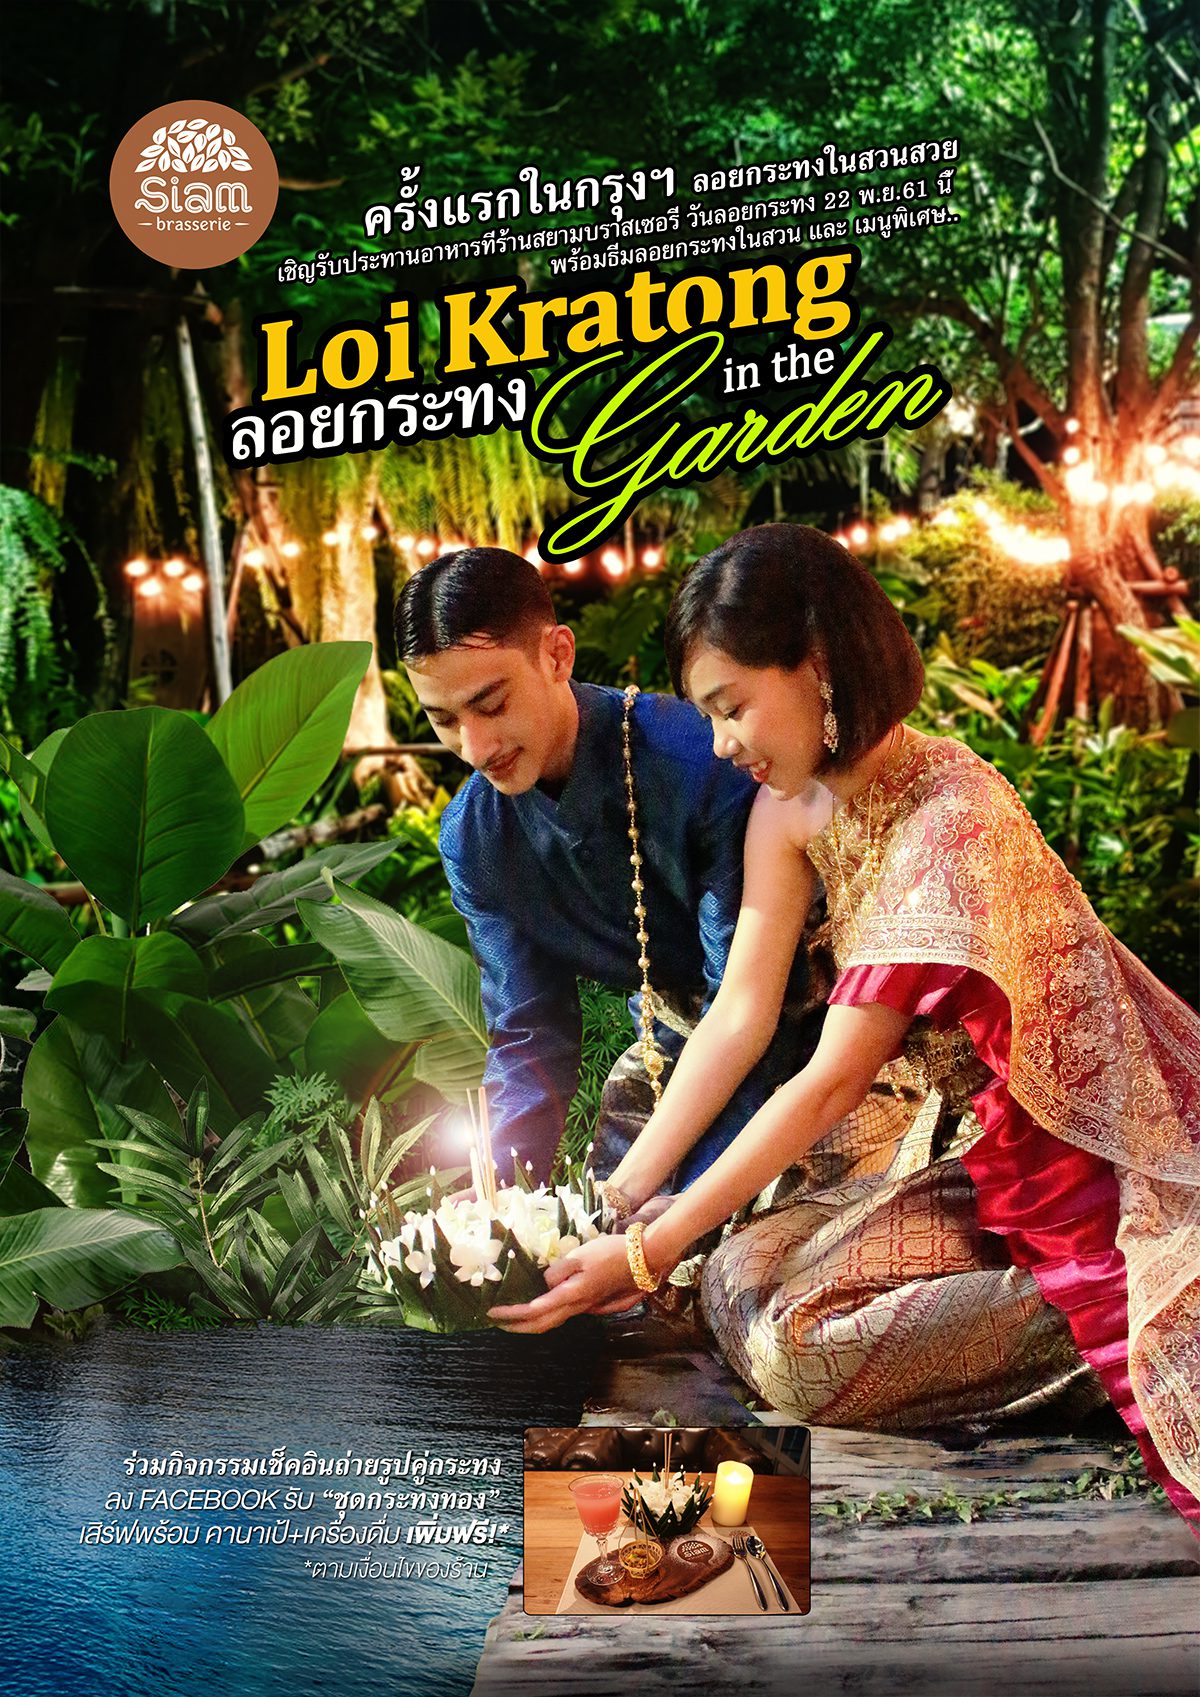 Siam Brasserie's Loi Kratong in The Garden